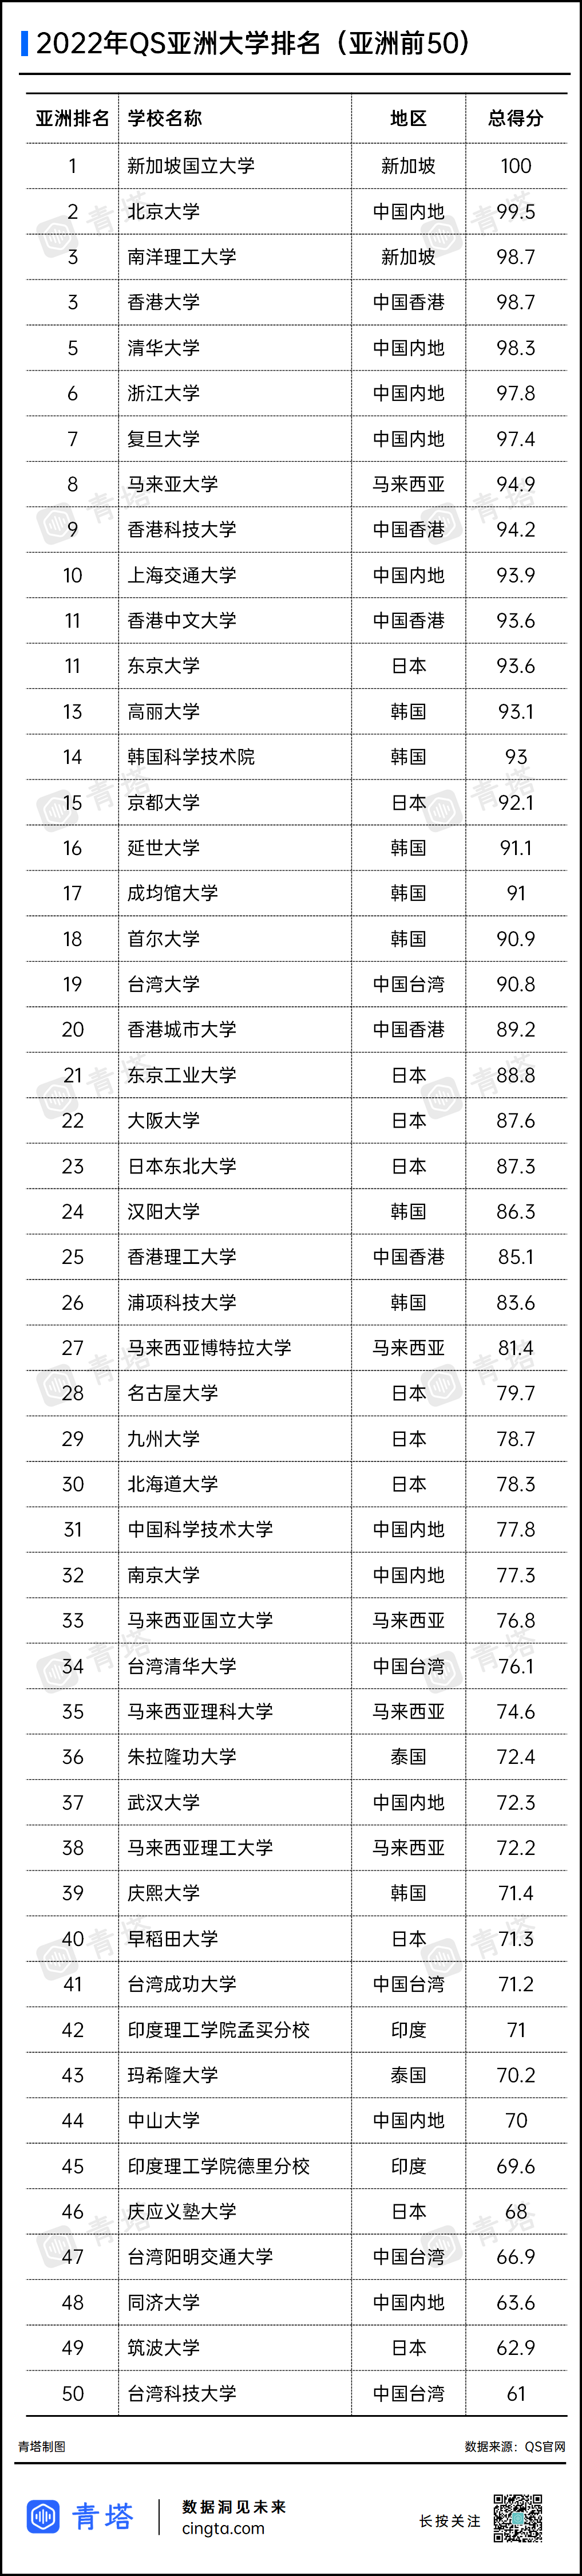 2022 QS亚洲大学排名TOP50高校详细名单.png